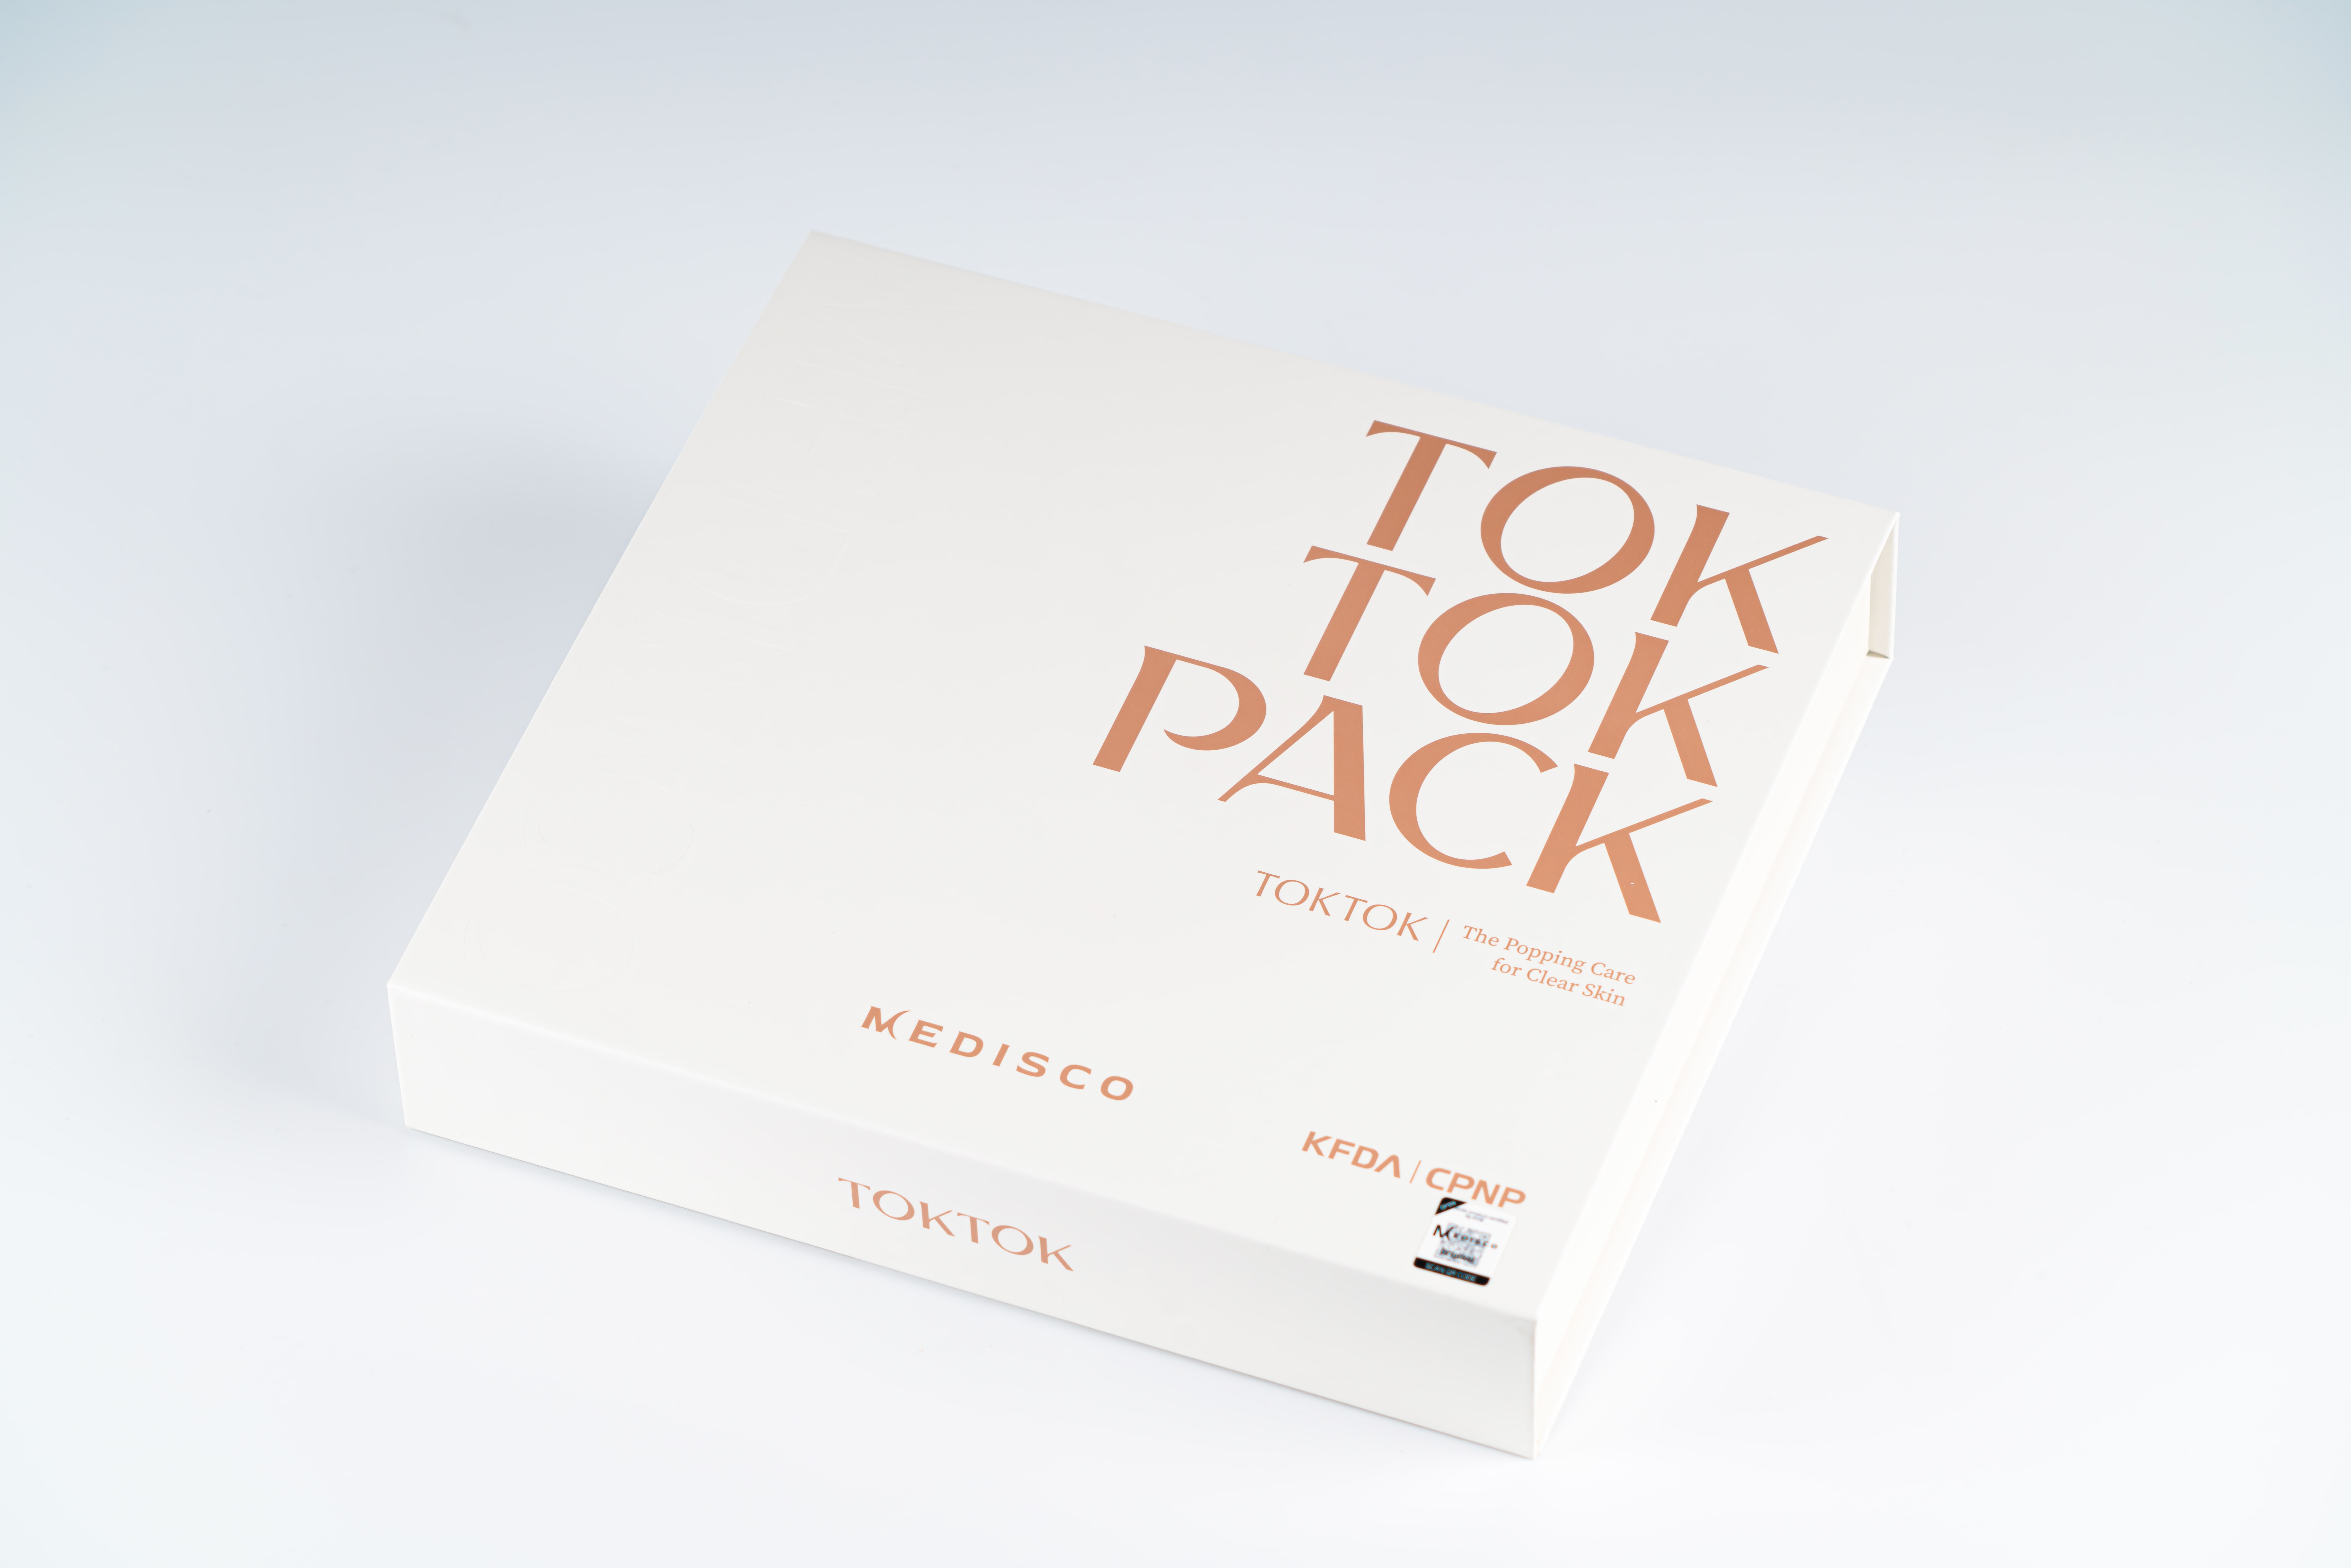 Tok Tok Pack Medisco Stayve bb glow